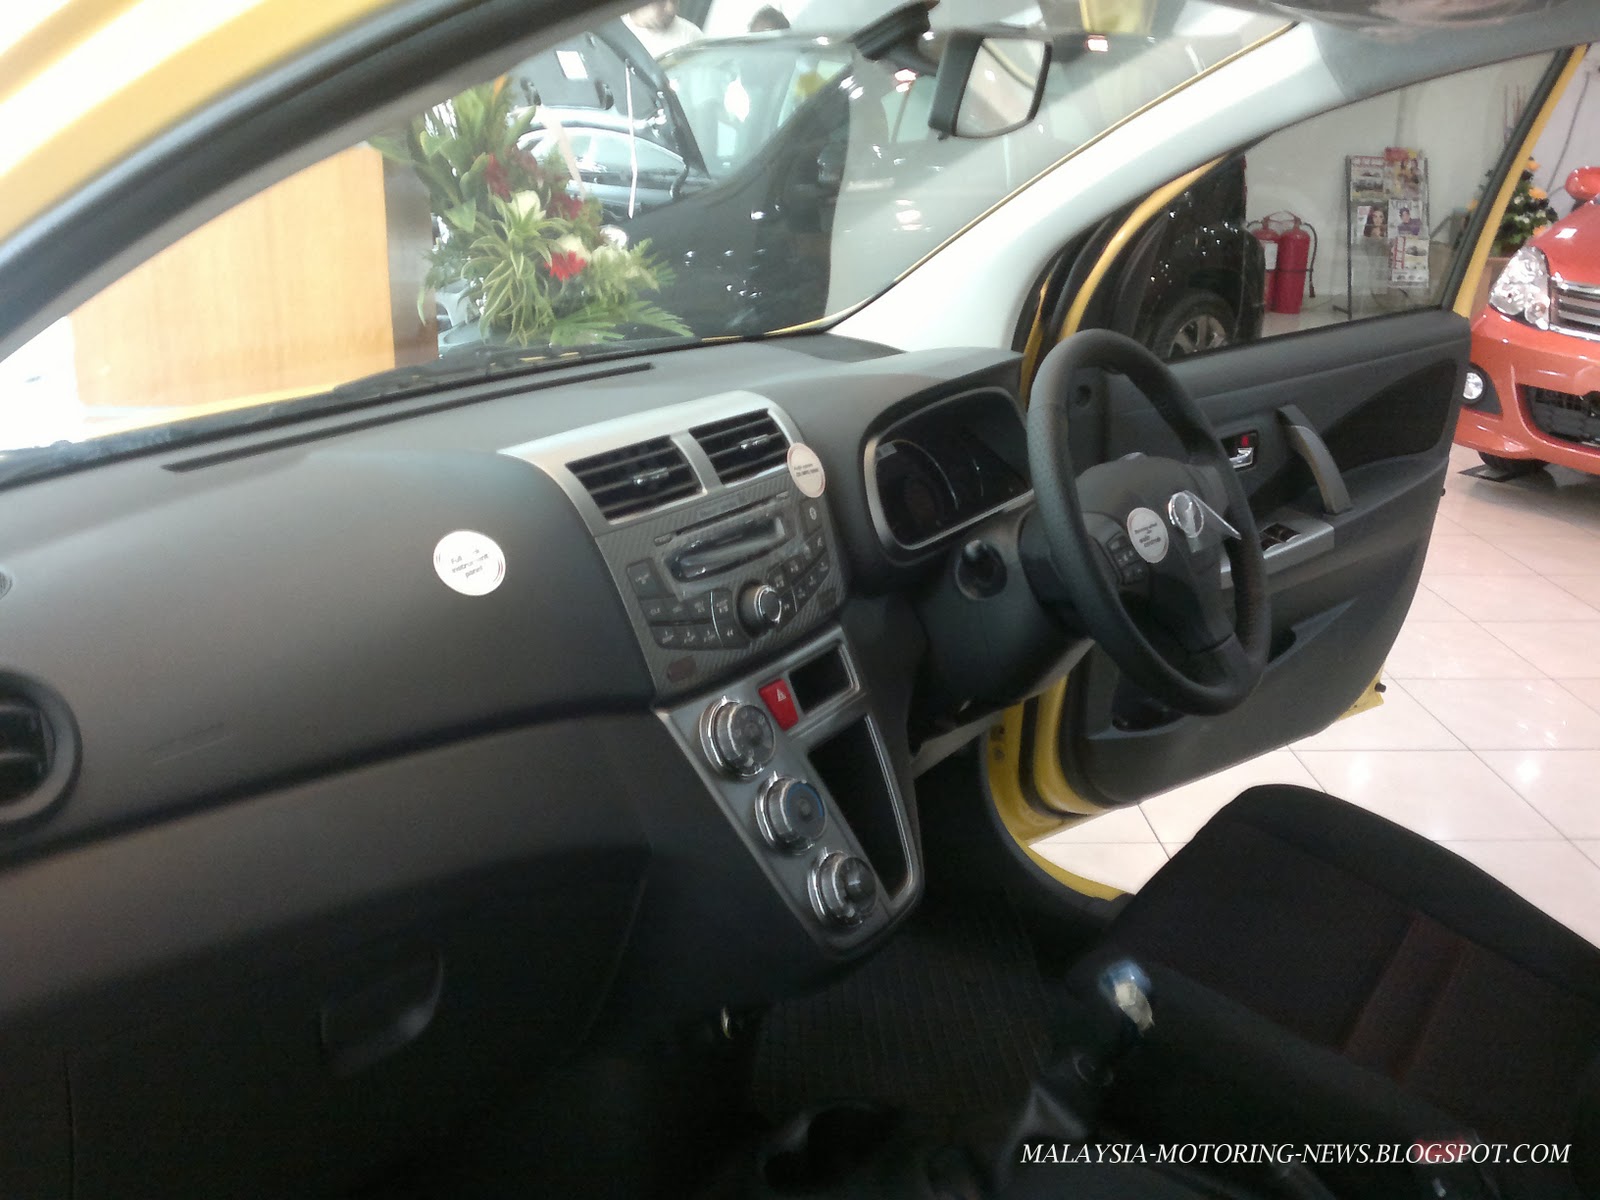 Malaysia Motoring News: Perodua Myvi 1.5 SE/Extreme 